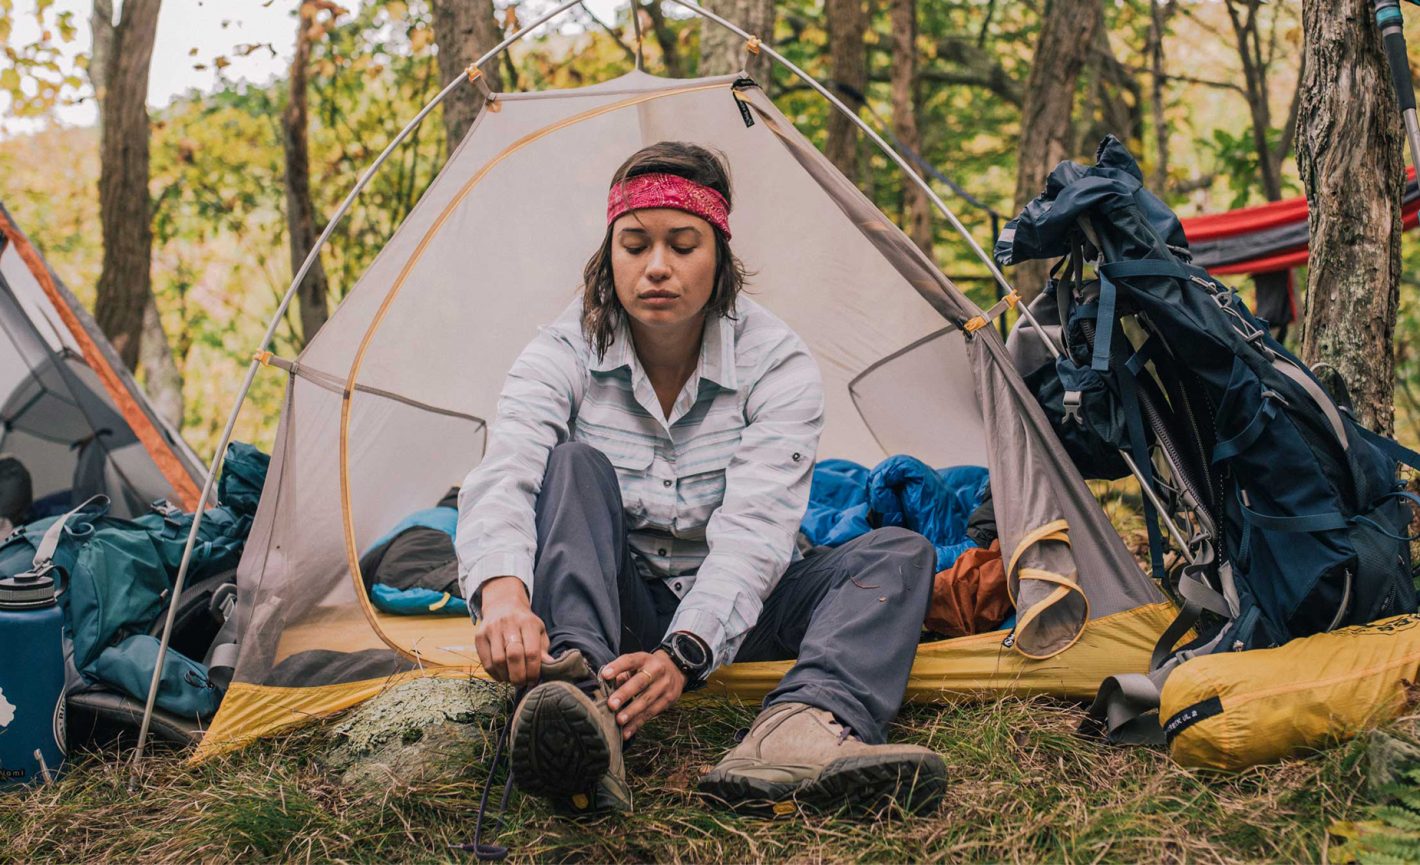 Sacramento REI Store to Host Free Women’s Camping Basics Course